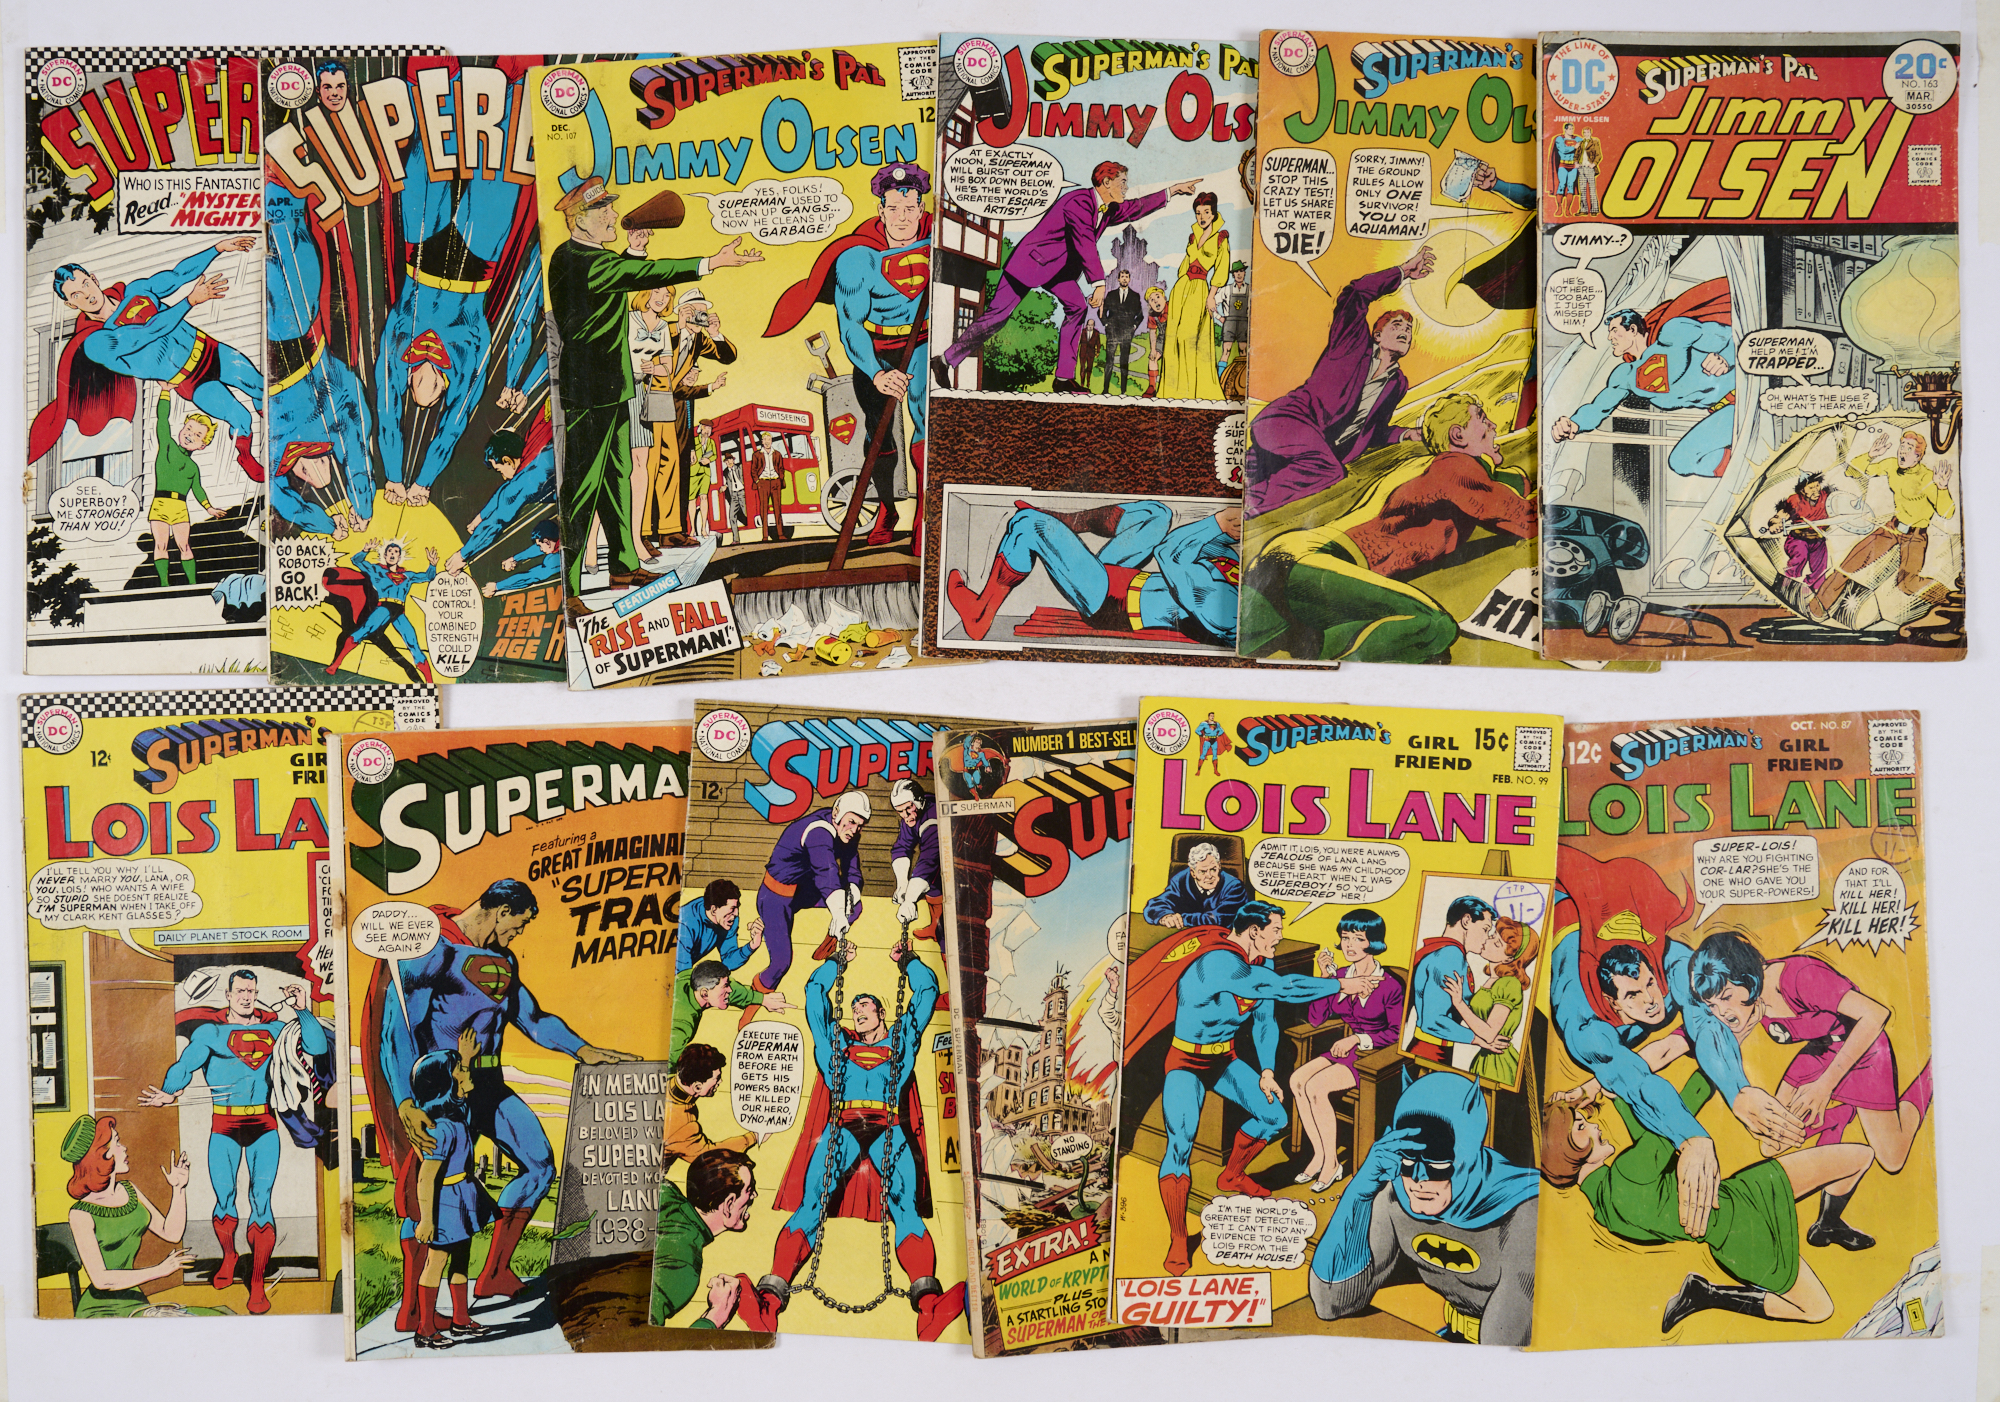 Superboy (1967-69) 137, 155, J. Olsen (1967-74) 107, 112, 115, 163, Lois Lane 63, 87, 99 and